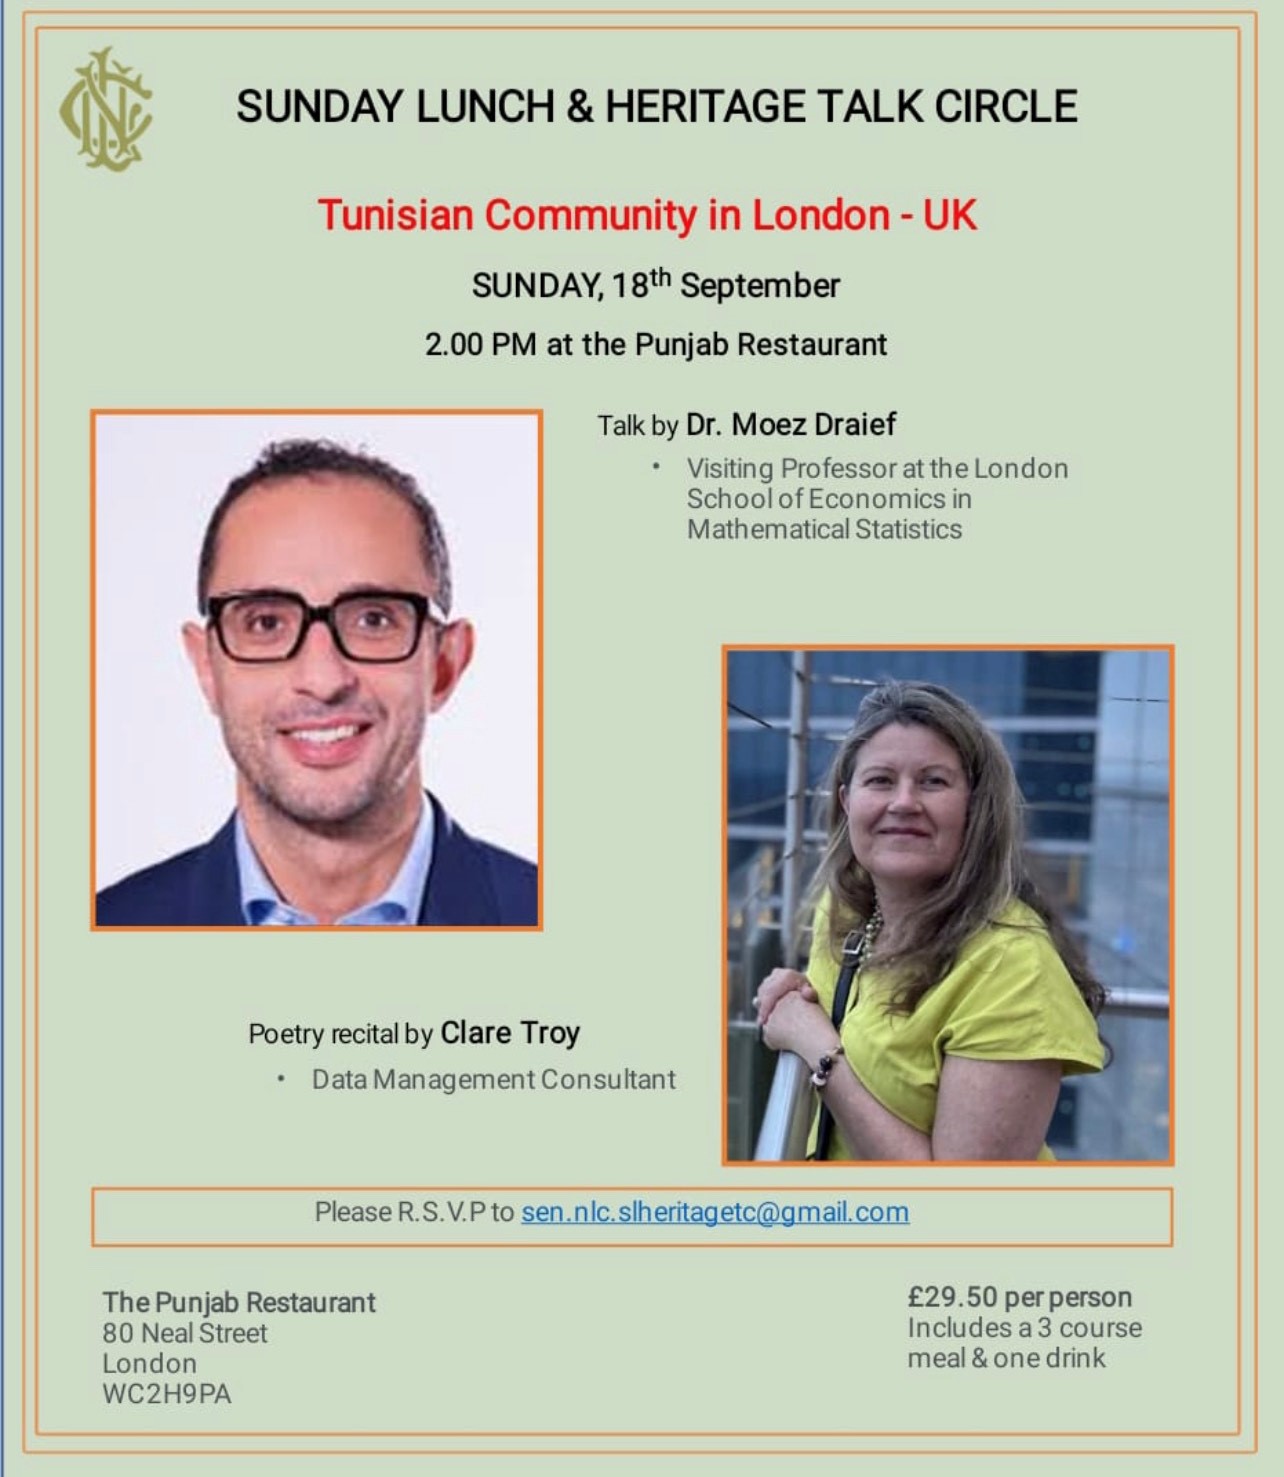 Sunday Lunch & Heritage Talk Circle